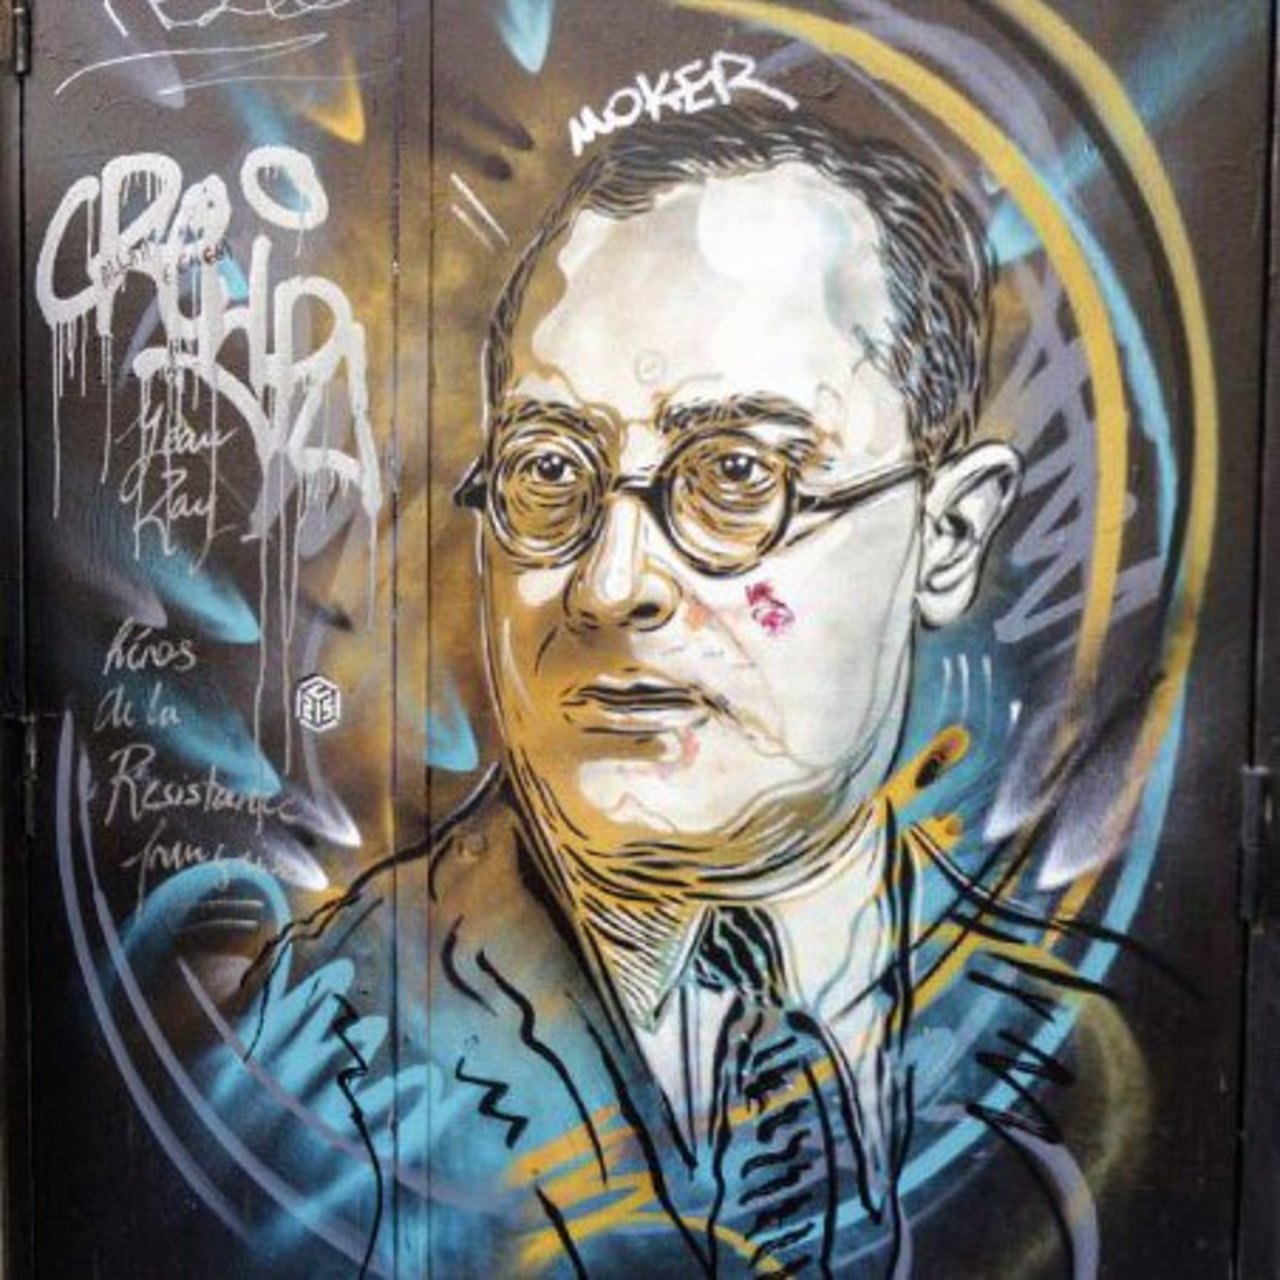 #Paris #graffiti photo by @jpoesse http://ift.tt/1R4FaZ8 #StreetArt https://t.co/AwJdDeUcRz